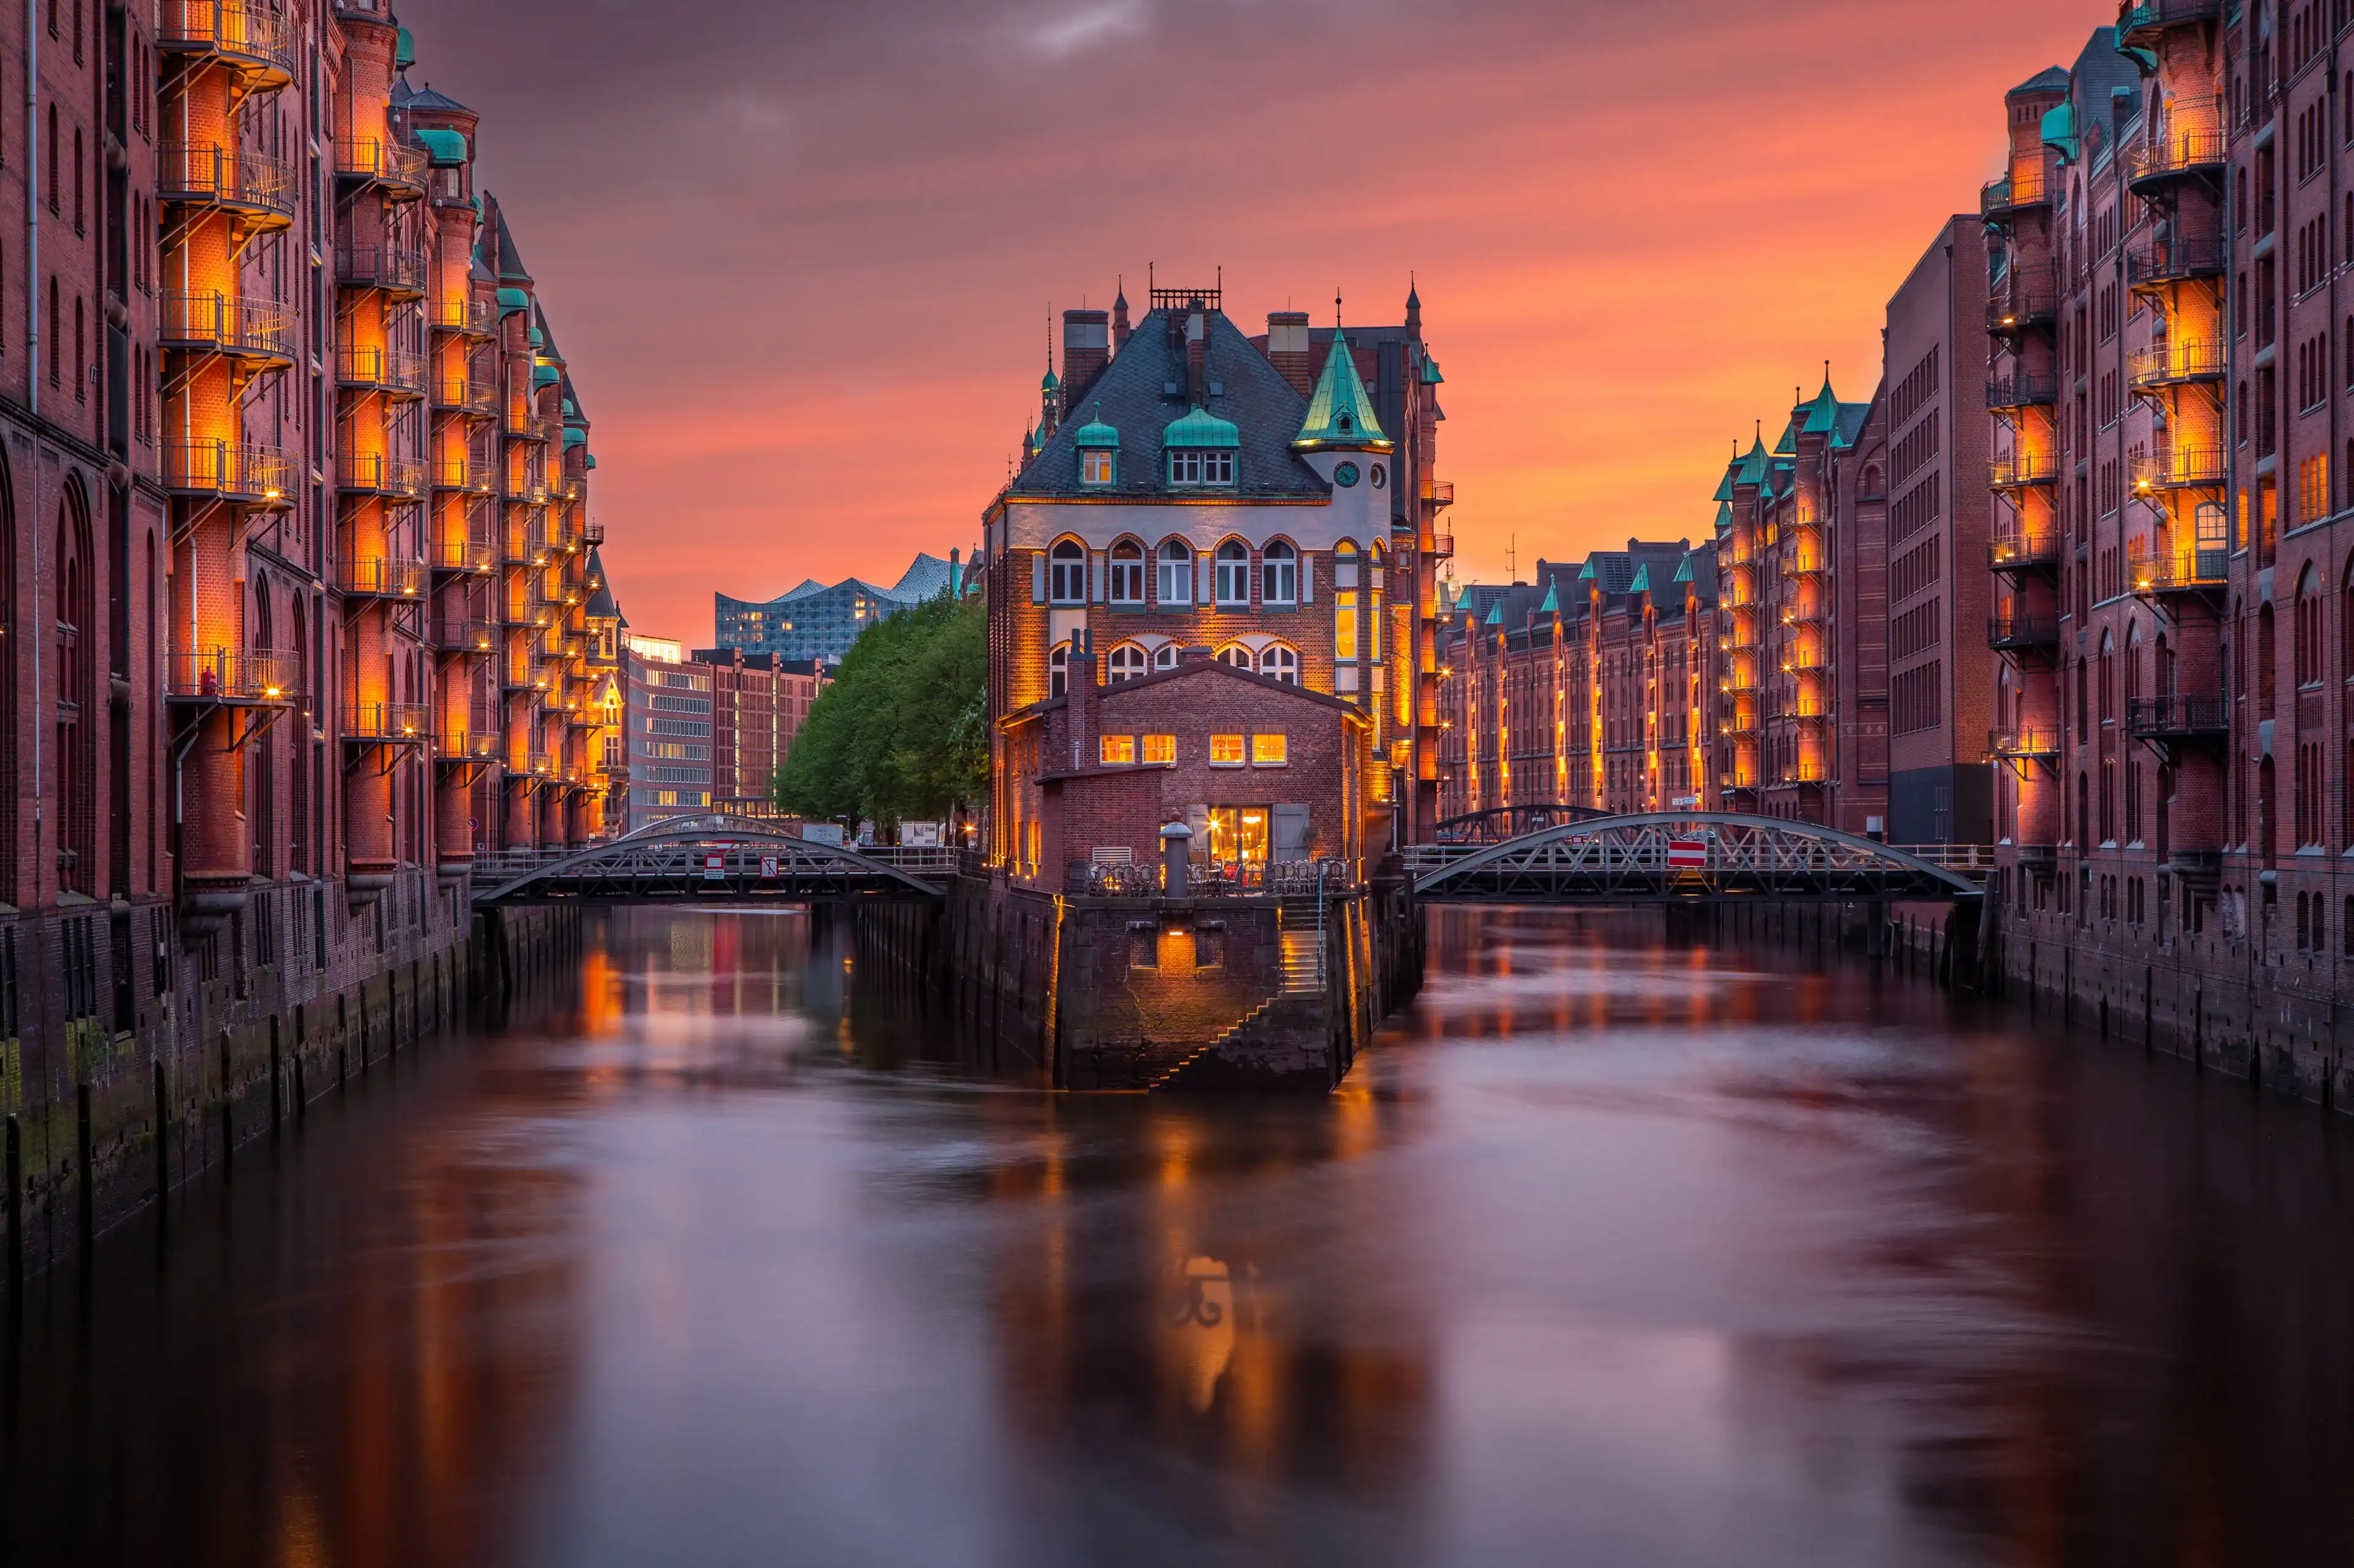 Best Hamburg hotels. Cheap hotels in Hamburg, Germany